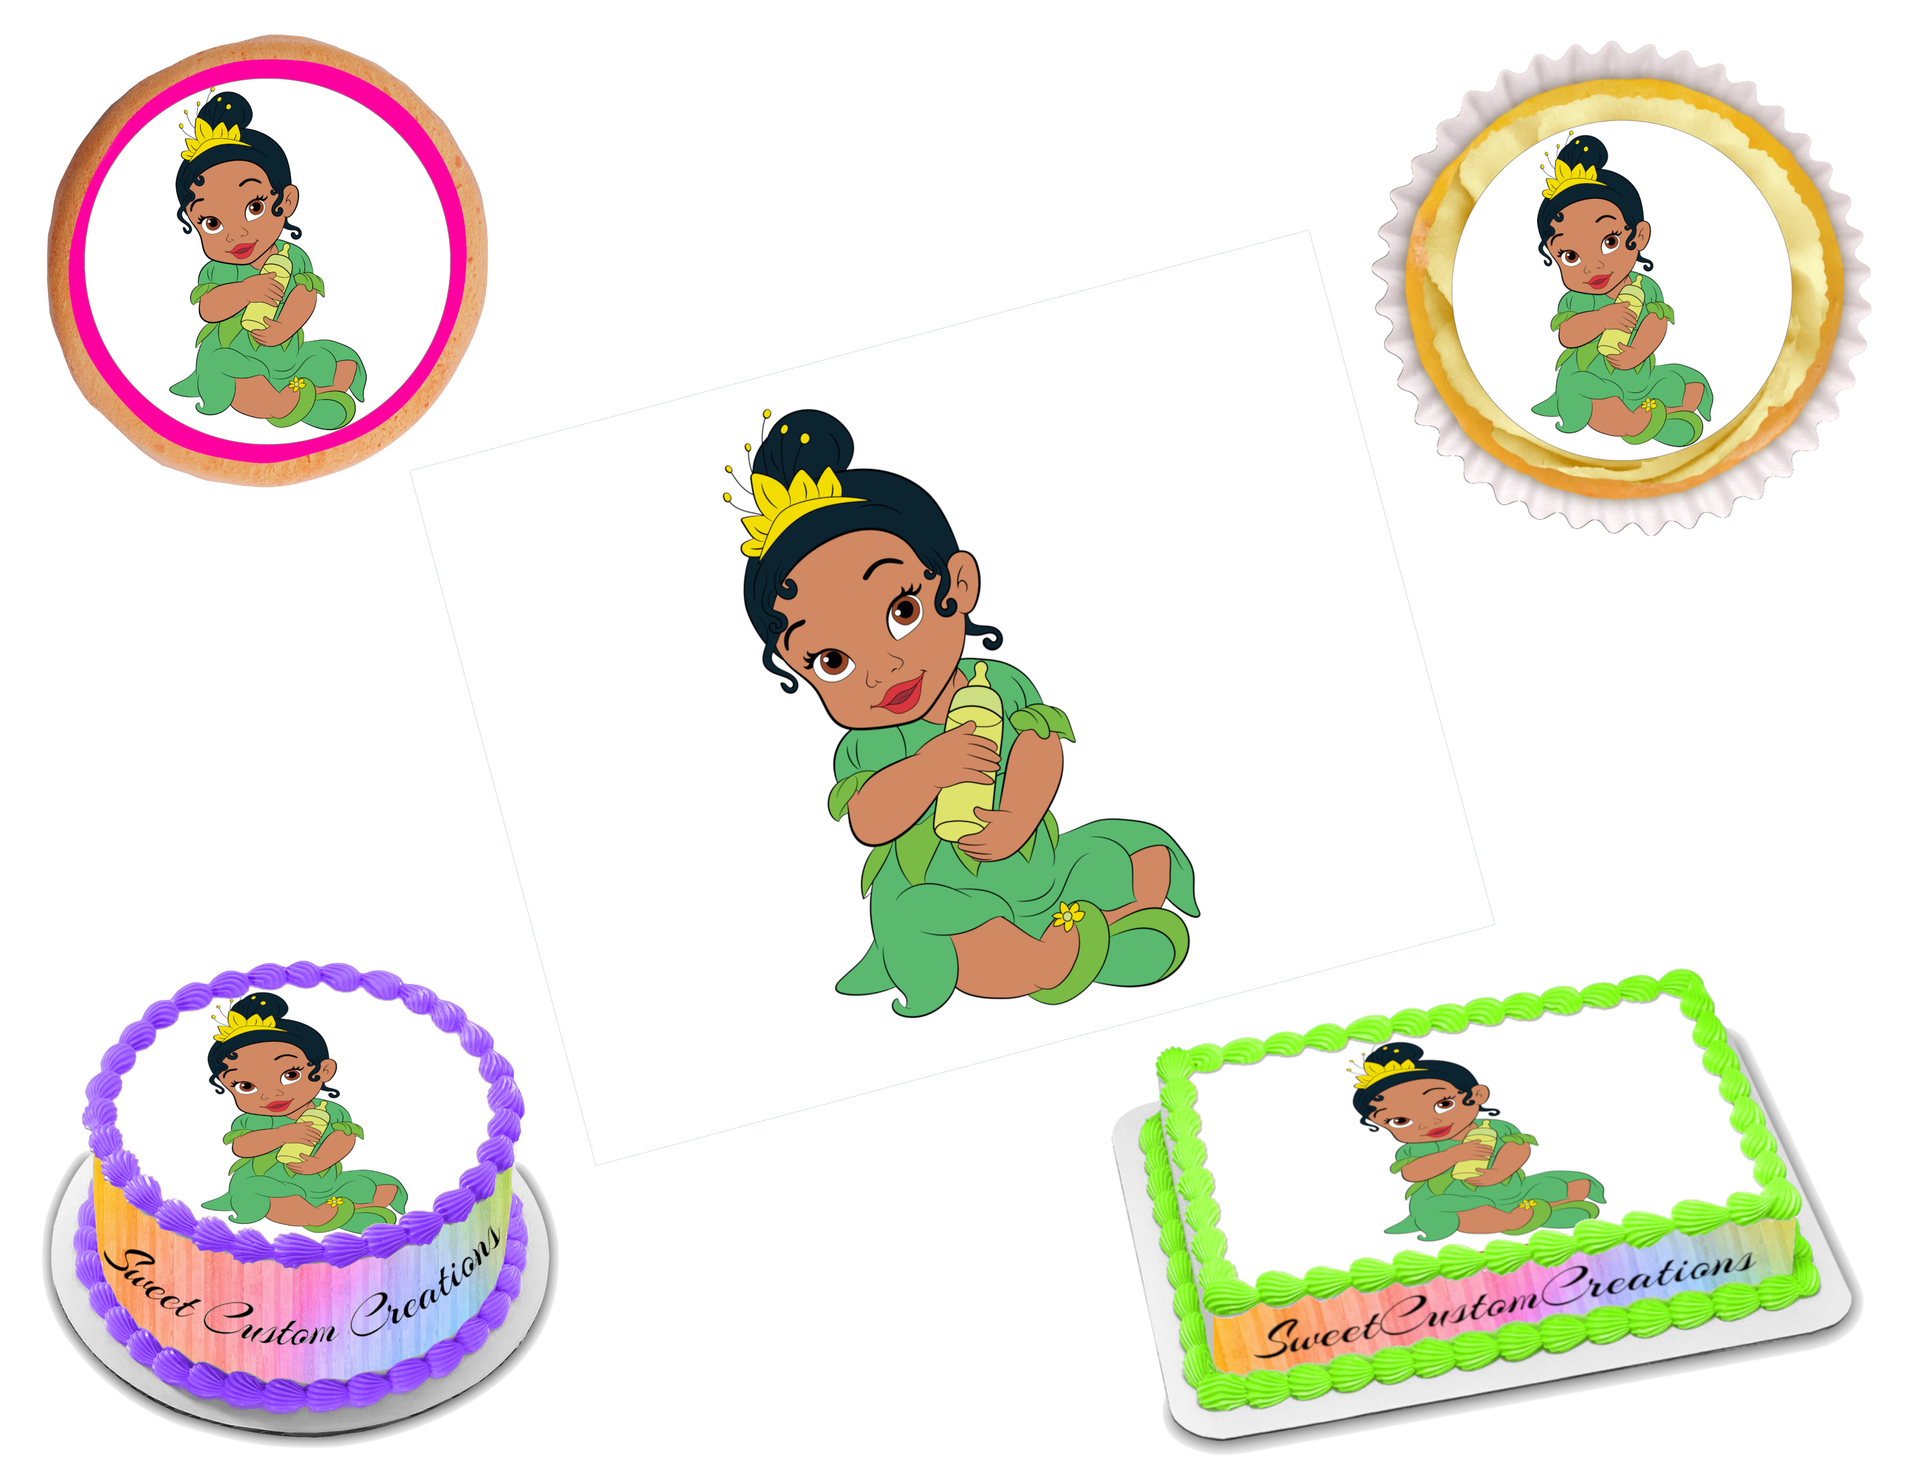 Baby princess tiana edible image frosting sheet sizes â sweet custom creations